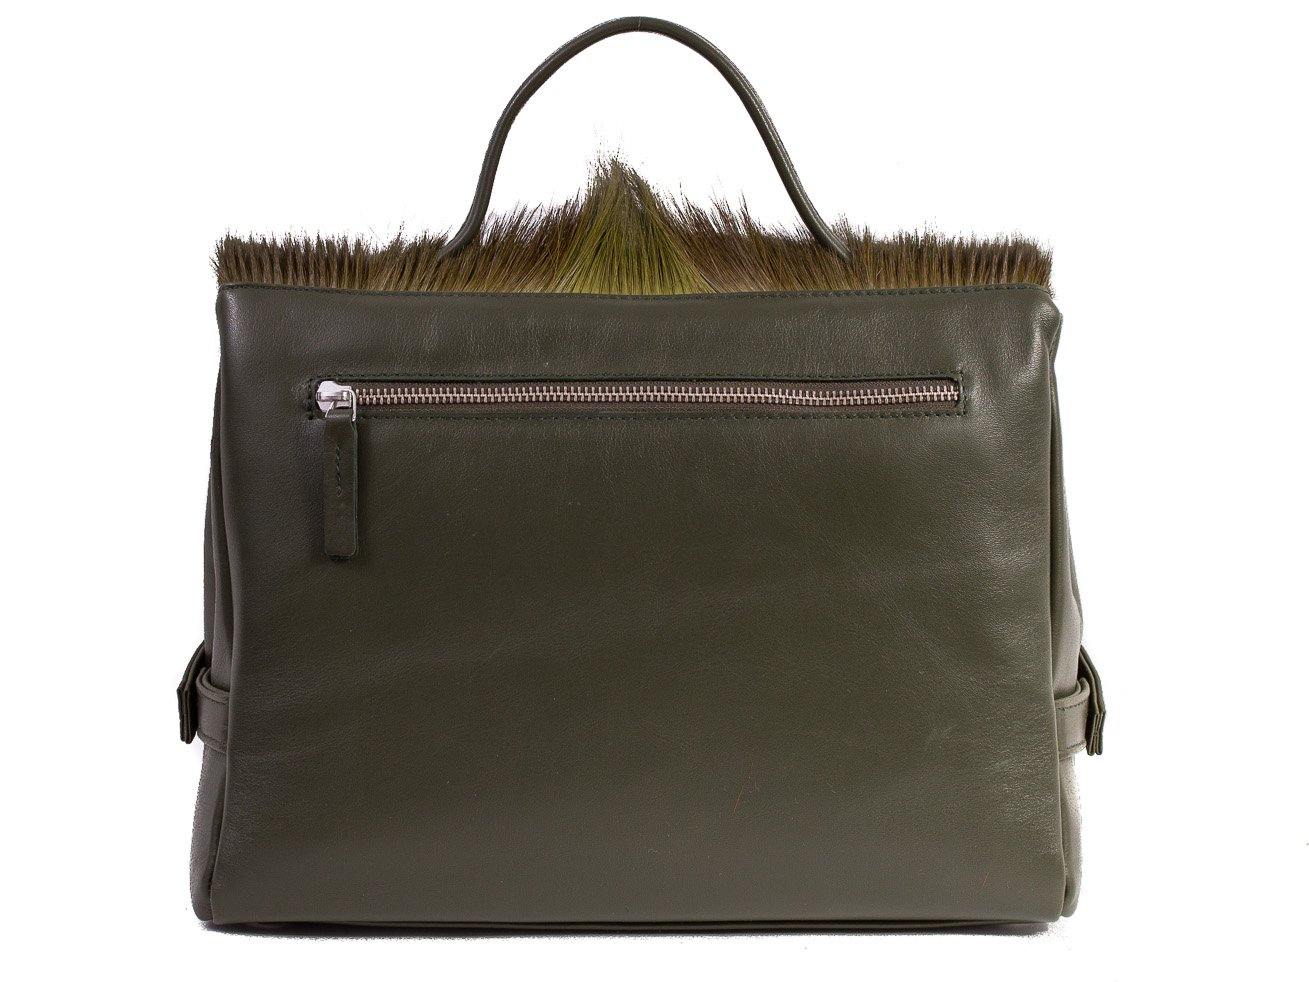 sherene melinda springbok hair-on-hide green leather smith tote bag Fan back